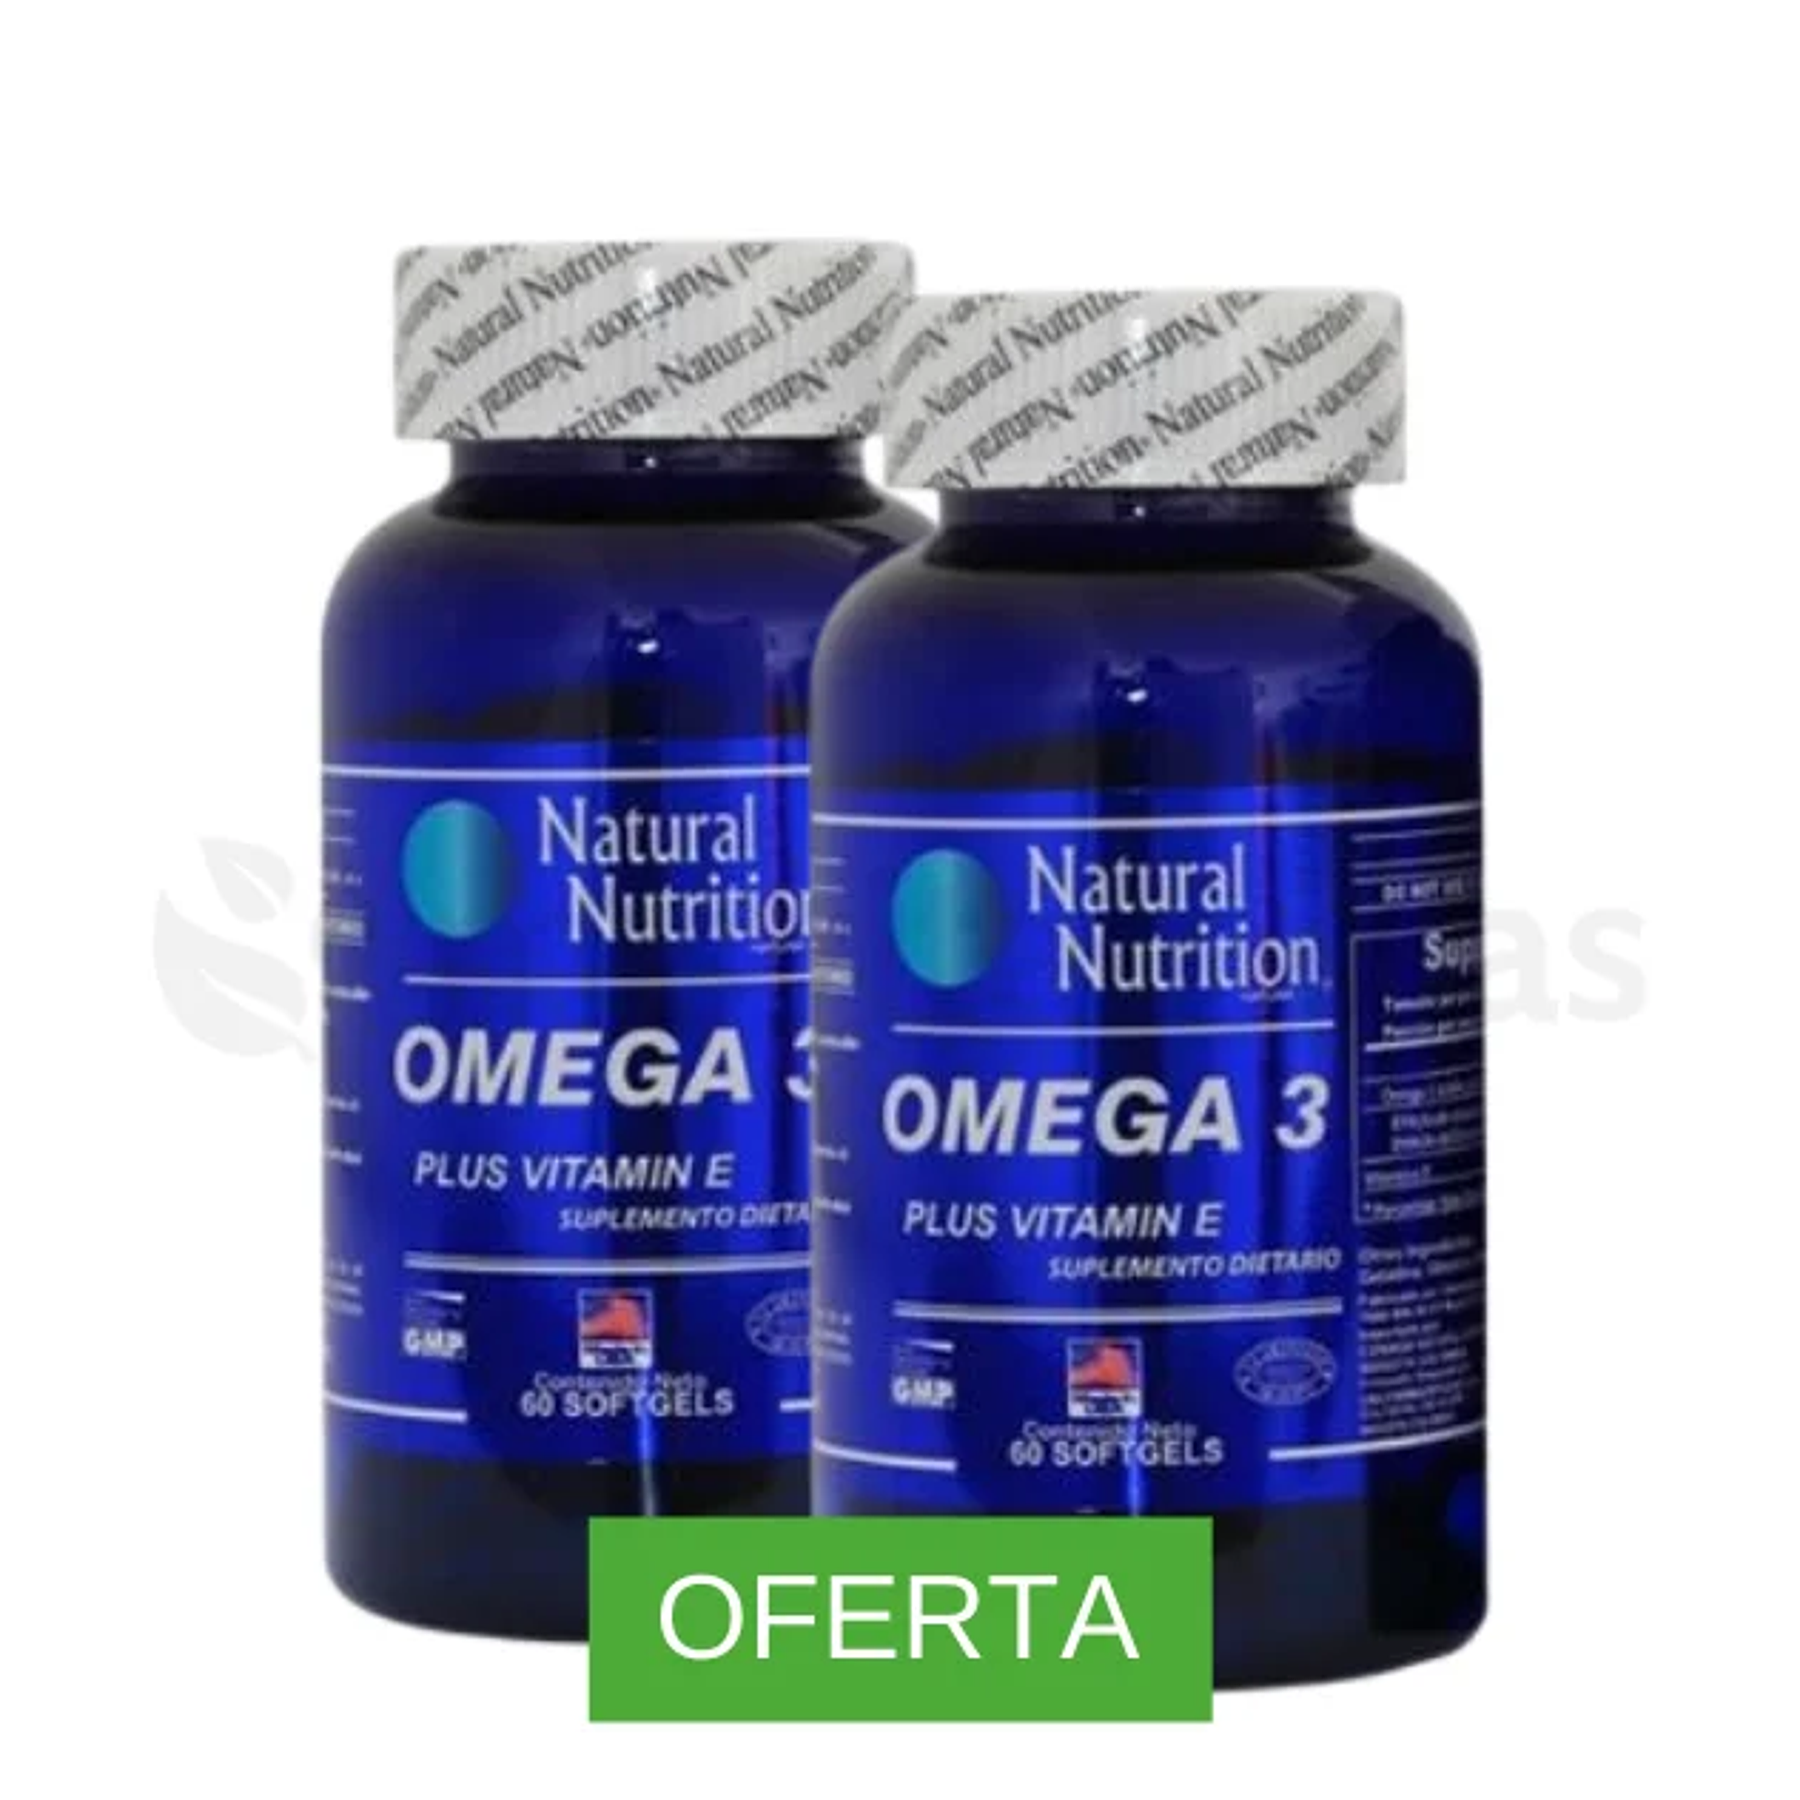 Oferta 2 Omega 3 Natural Nutrition 120 Softgels